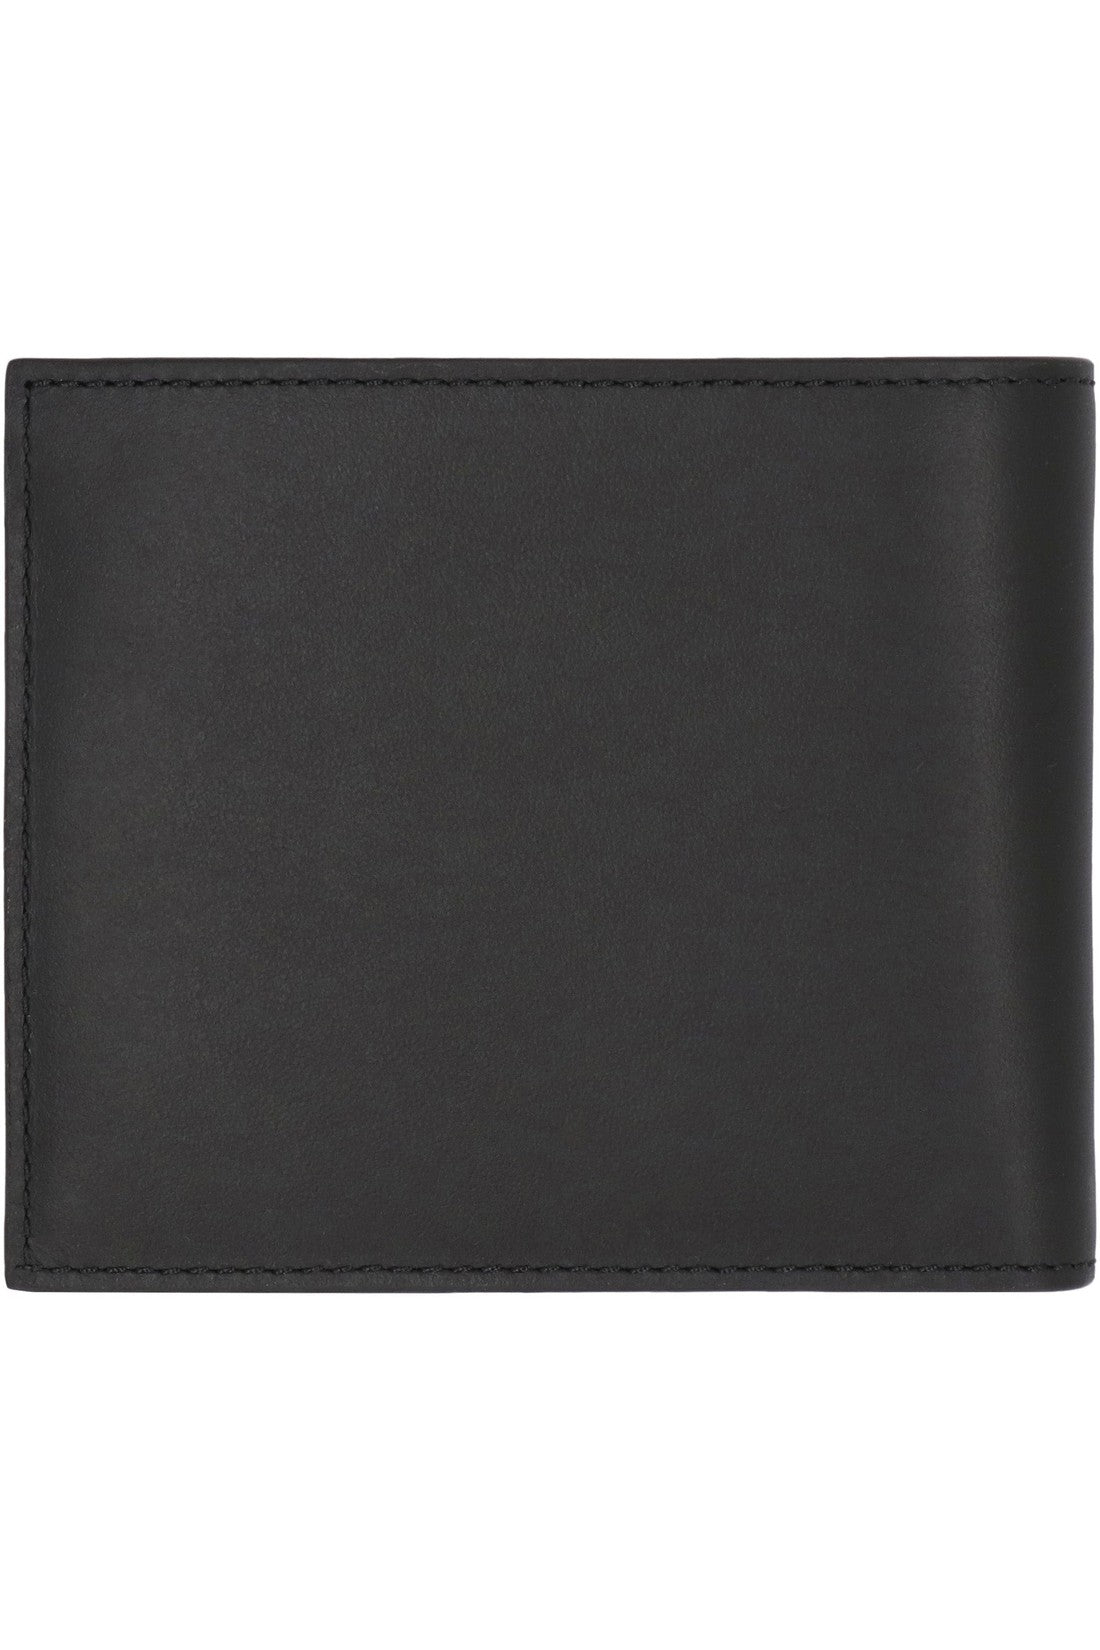 Paul Smith-OUTLET-SALE-Leather wallet-ARCHIVIST